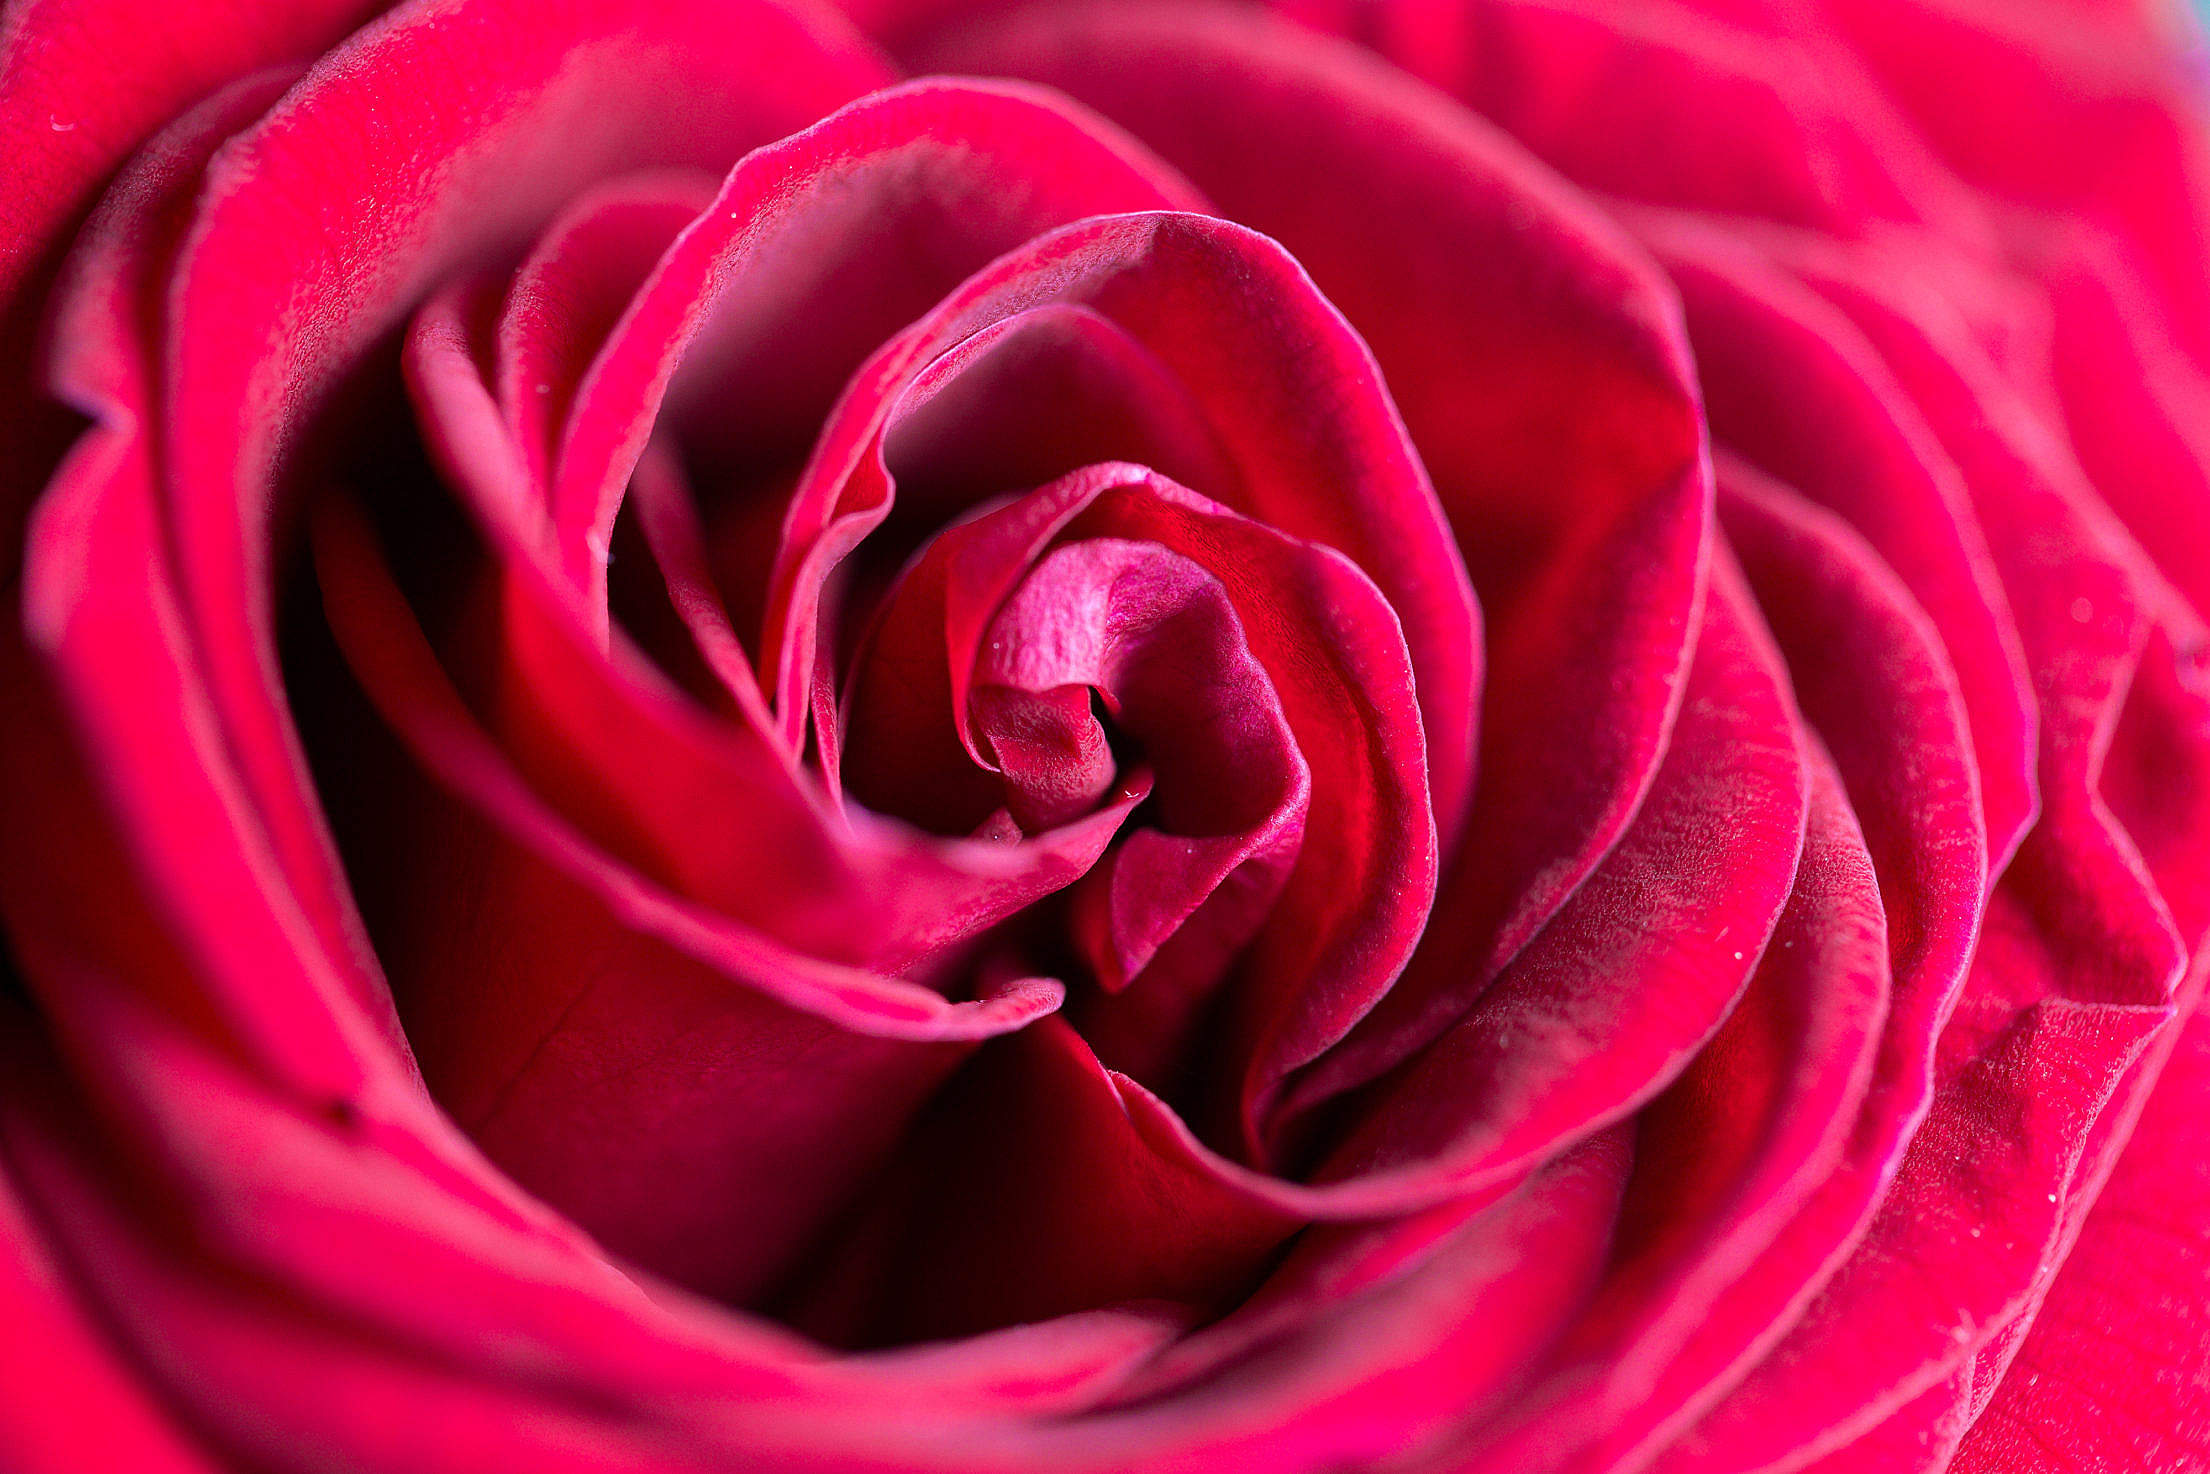 Wonderful Rose Flower Close Up Free Stock Photo Download | picjumbo